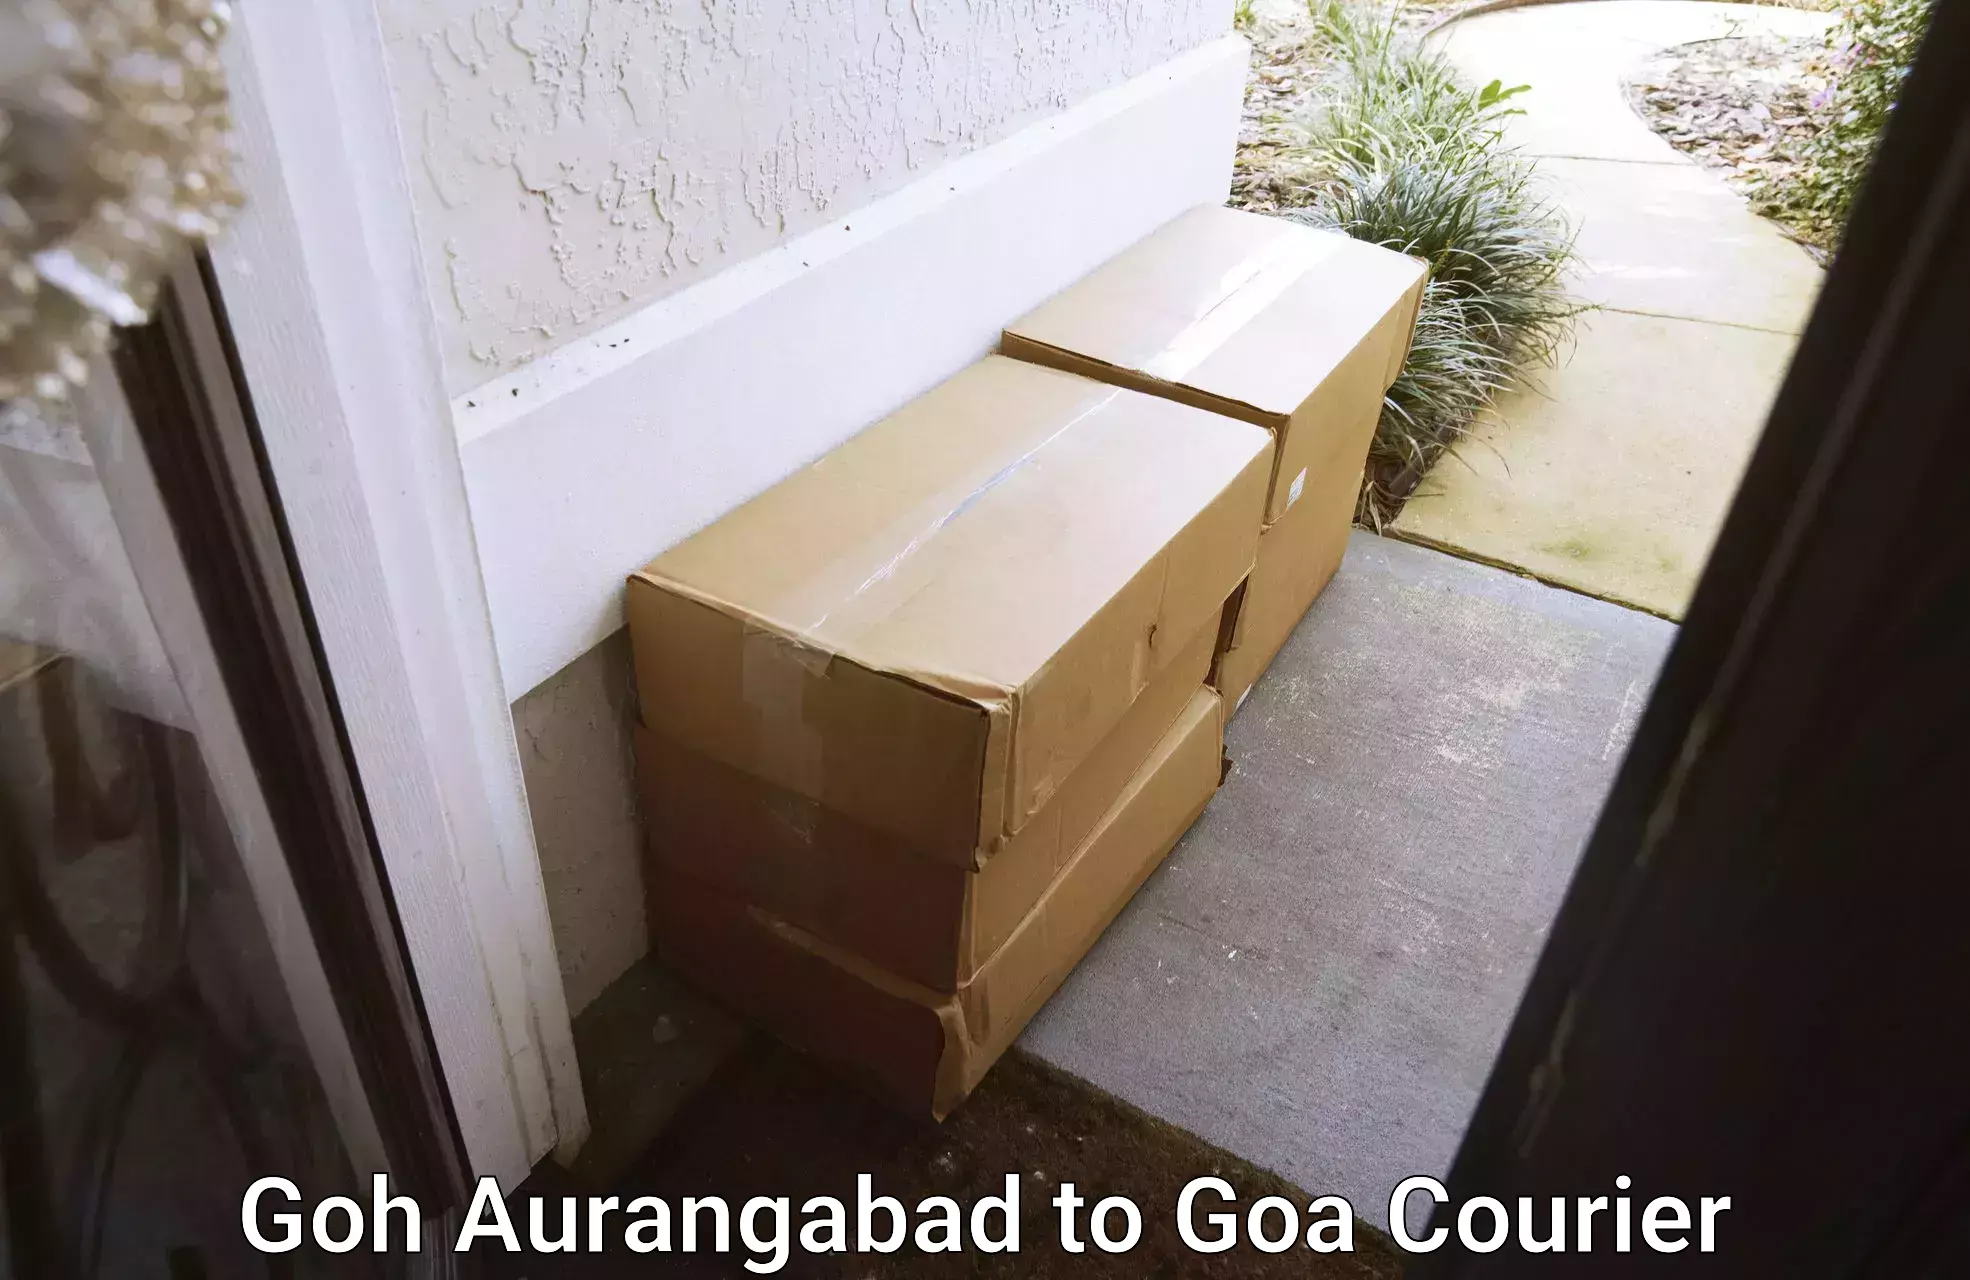 Efficient moving company Goh Aurangabad to South Goa